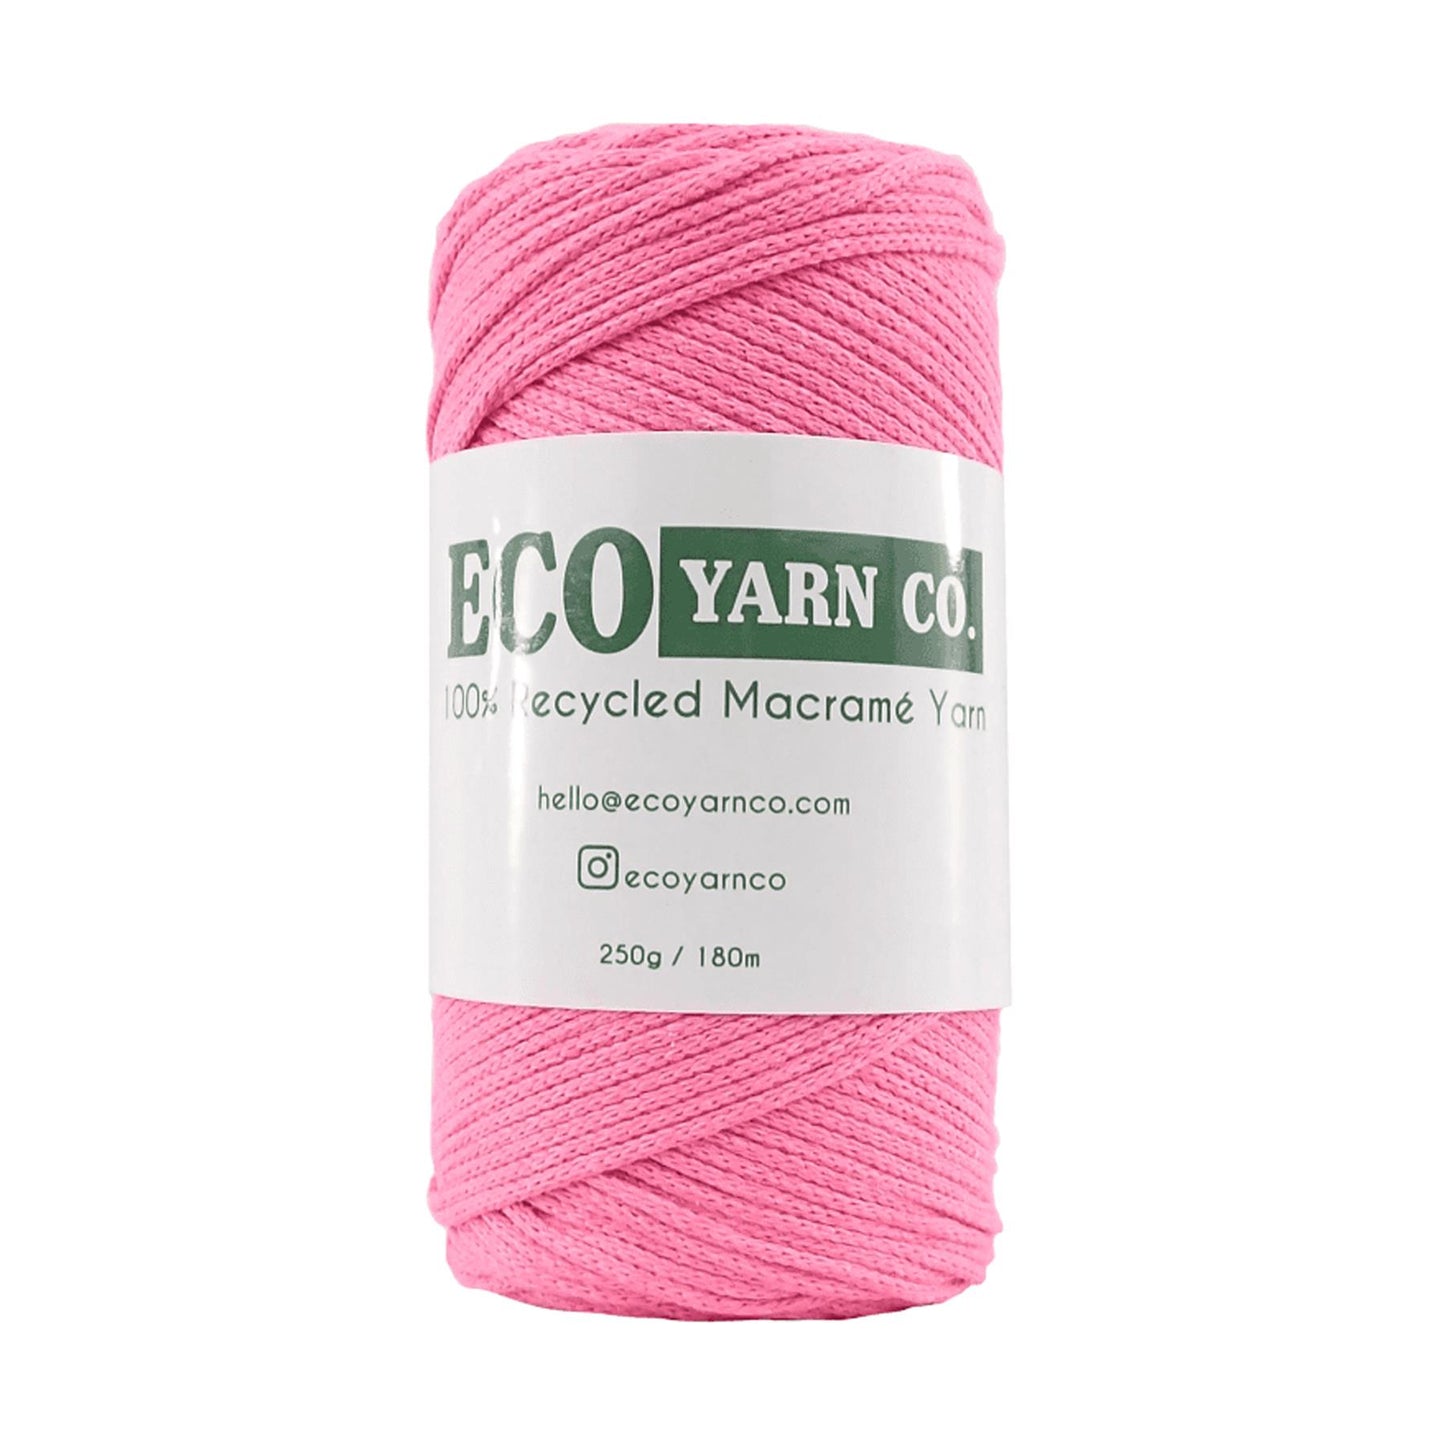 [Eco Yarn Co] Dark Pink Cotton/Polyester Macrame Yarn - 180M, 250g